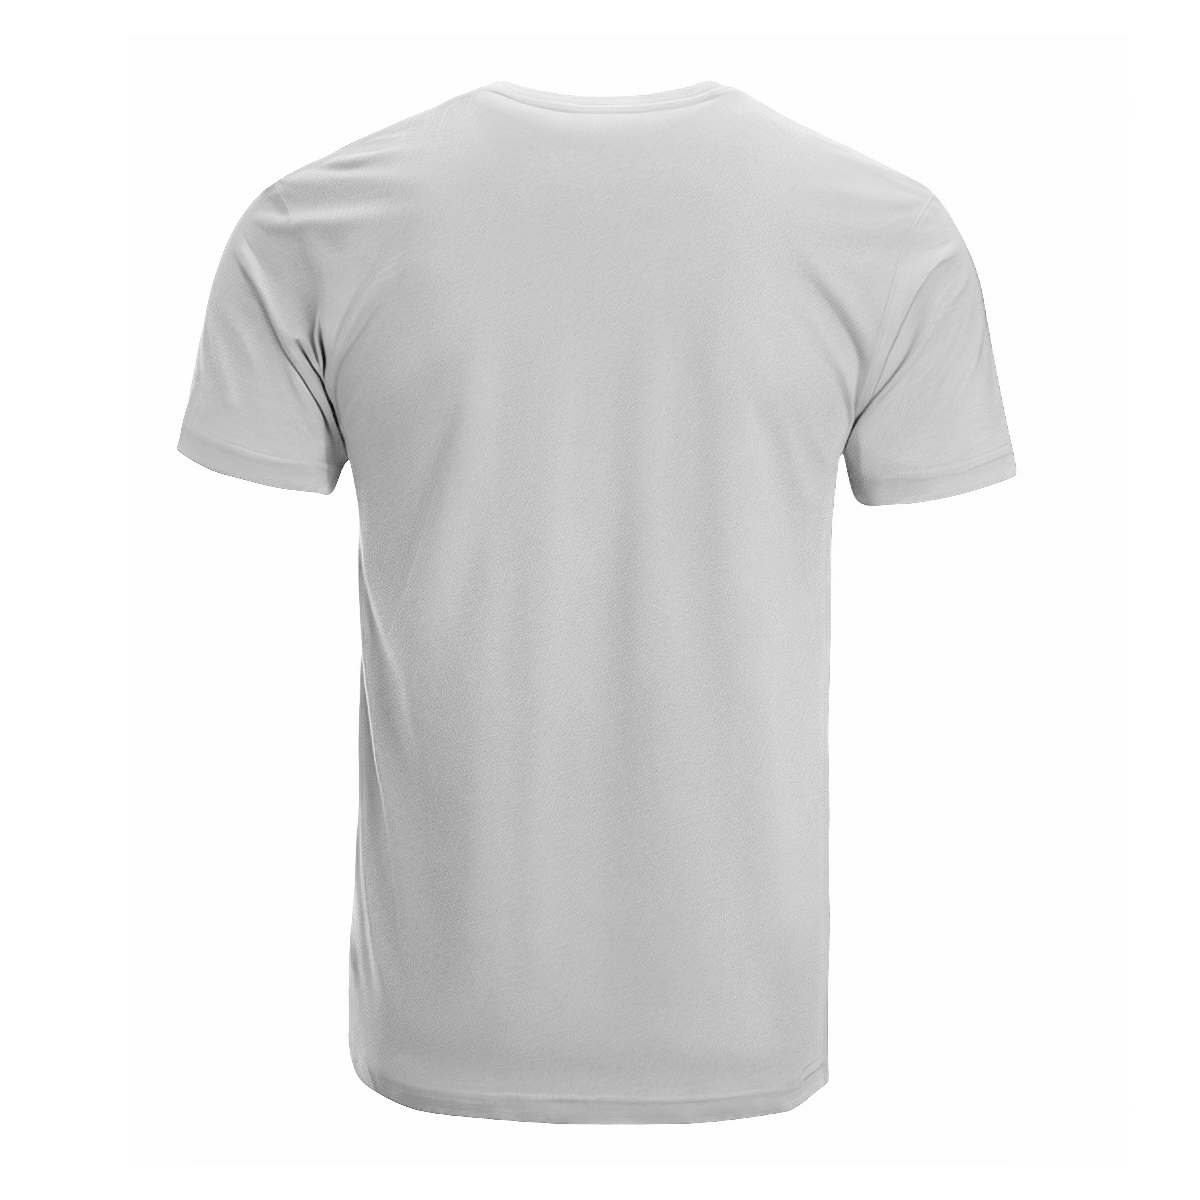 Thomson Tartan Crest T-shirt - I'm not yelling style